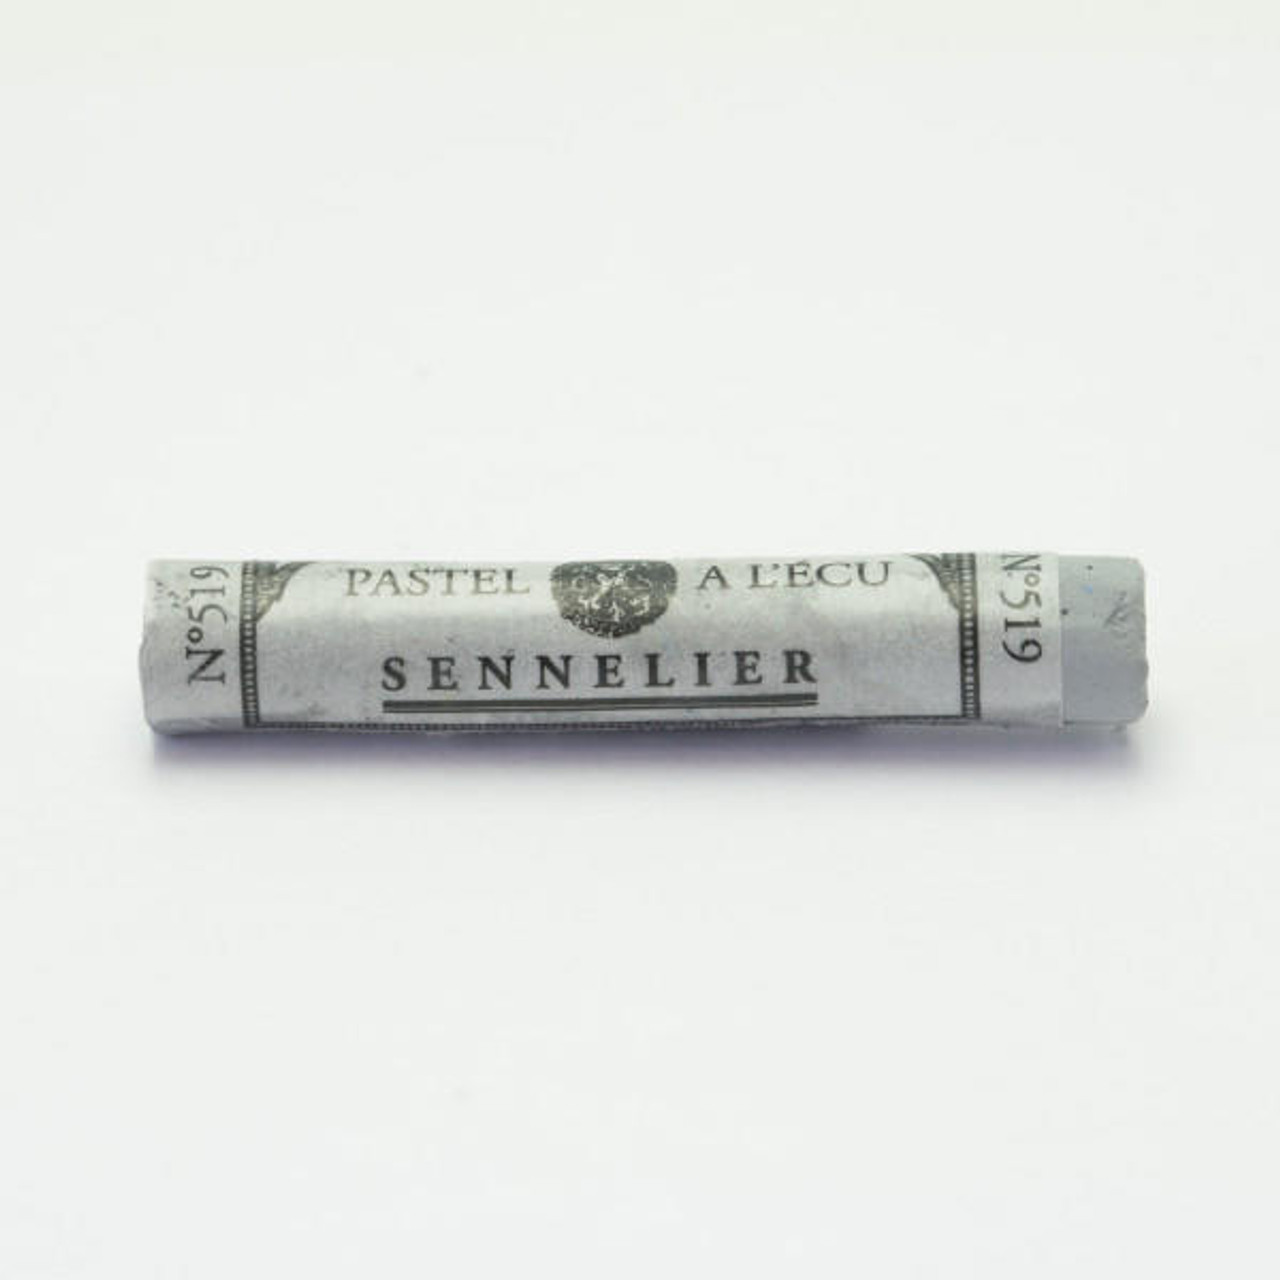 Sennelier Extra-Soft Pastel - Gray 6 - 519 - Sam Flax Atlanta